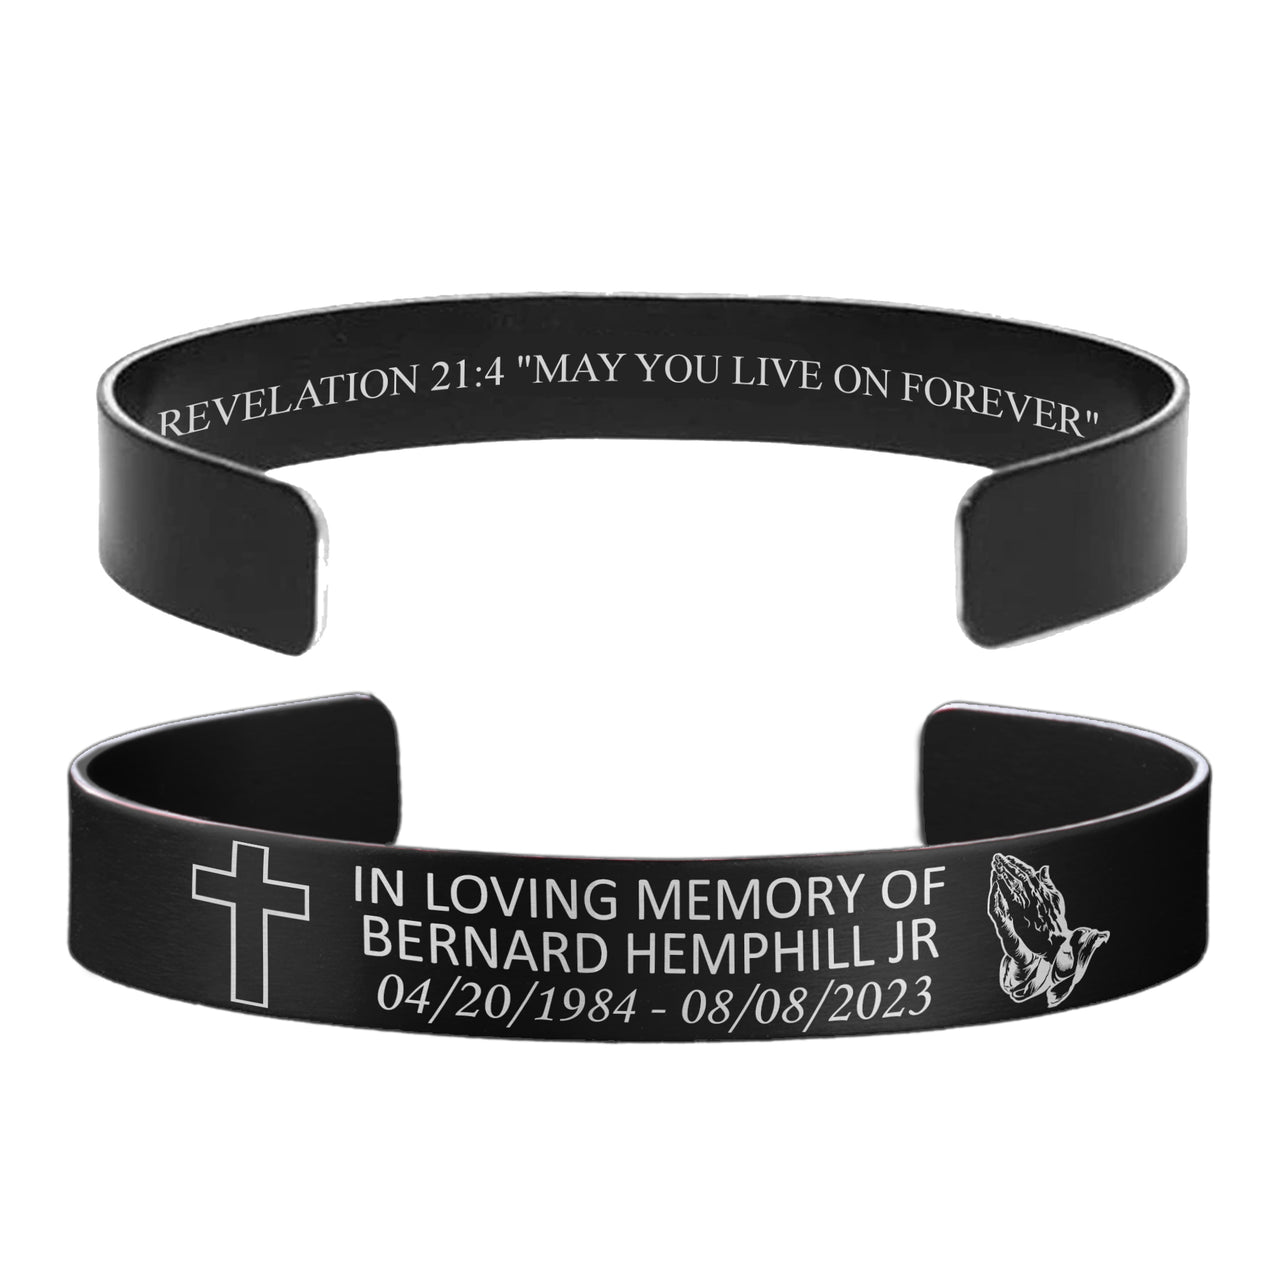 Bernard Hemphill Jr Memorial Band – Hosted by the Meriweather Family